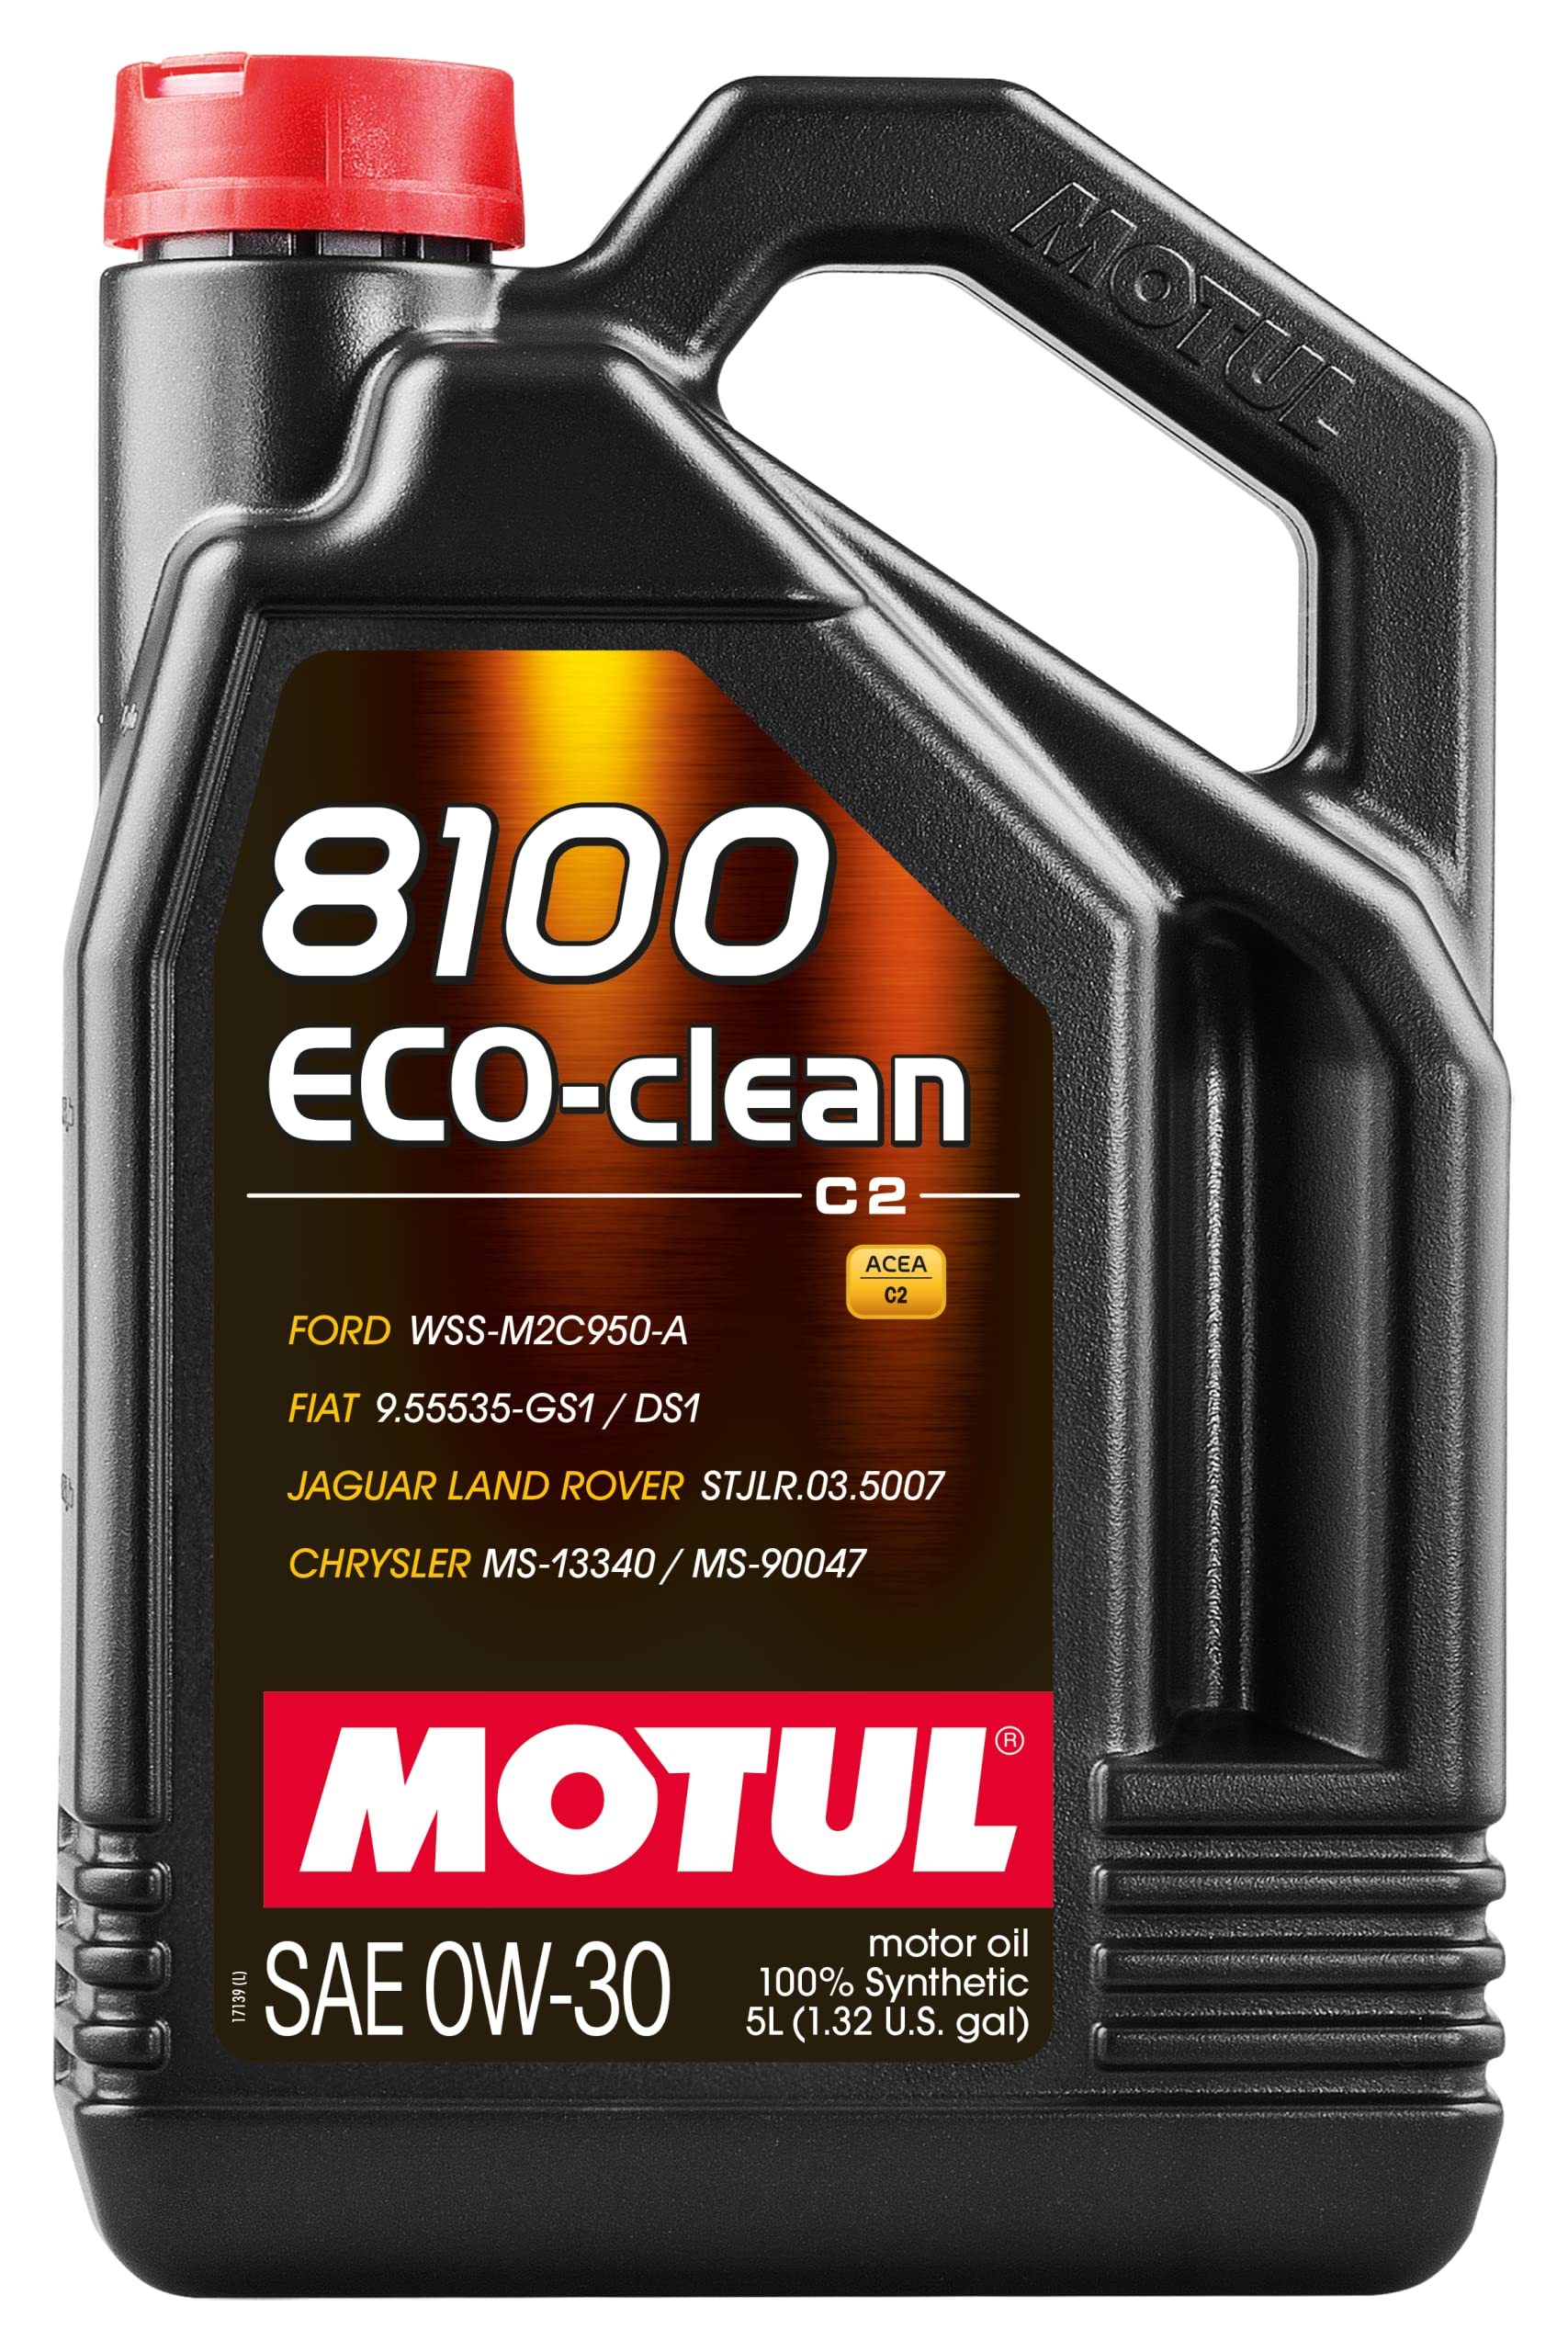 Motul 102889 Motoröl 8100 Eco-Clean 0W-30, 5 L, Brown von Motul